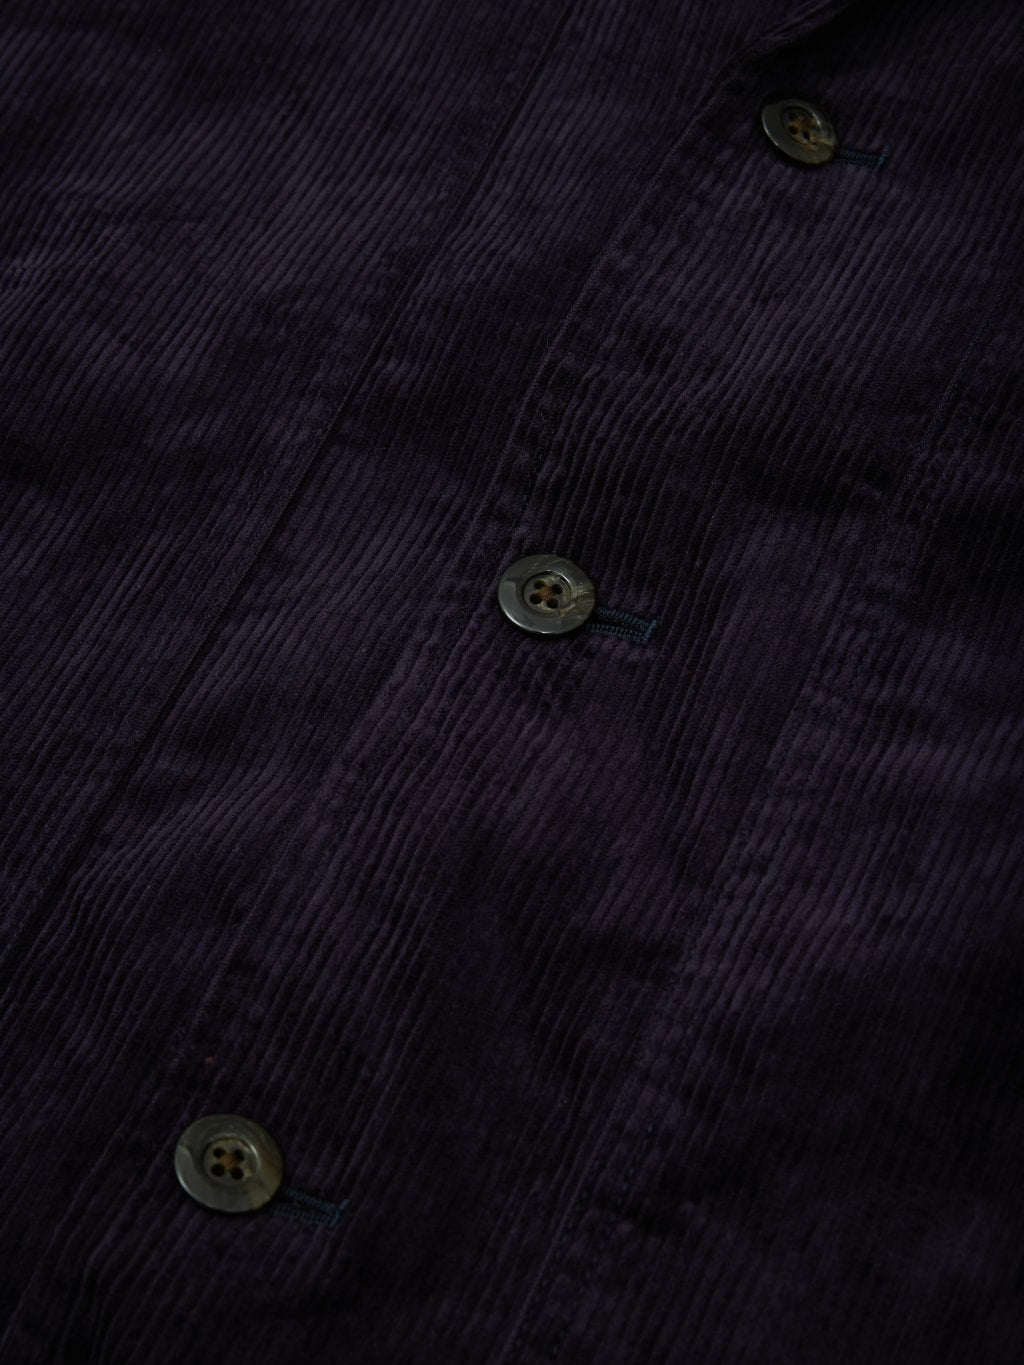 Tanuki Sazanami Corduroy natural indigo dyed Jacket  urea buttons